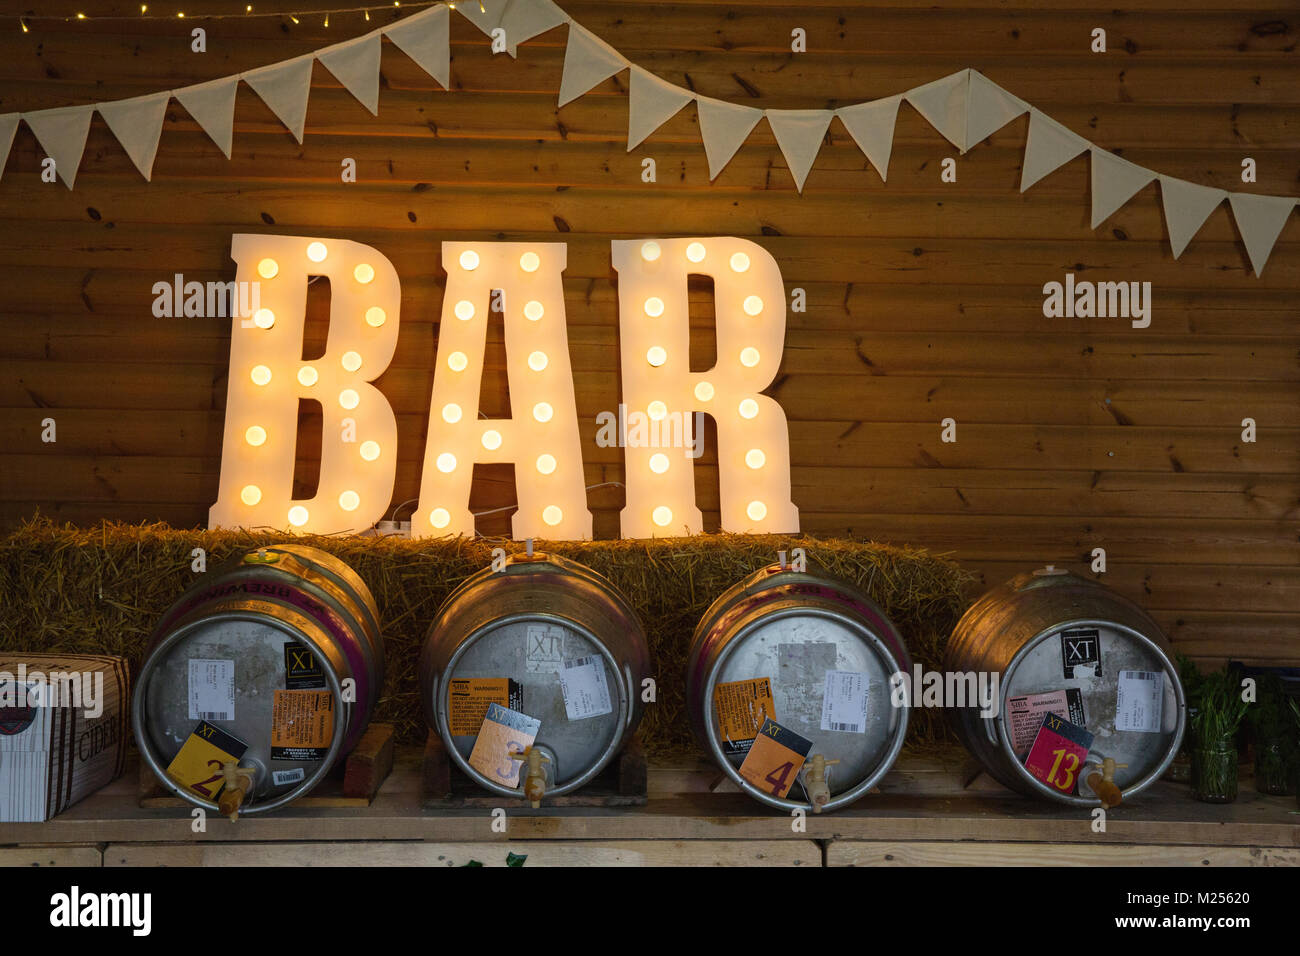 Barn with bunting, beer barrels and illuminated bar sign Stock Photo